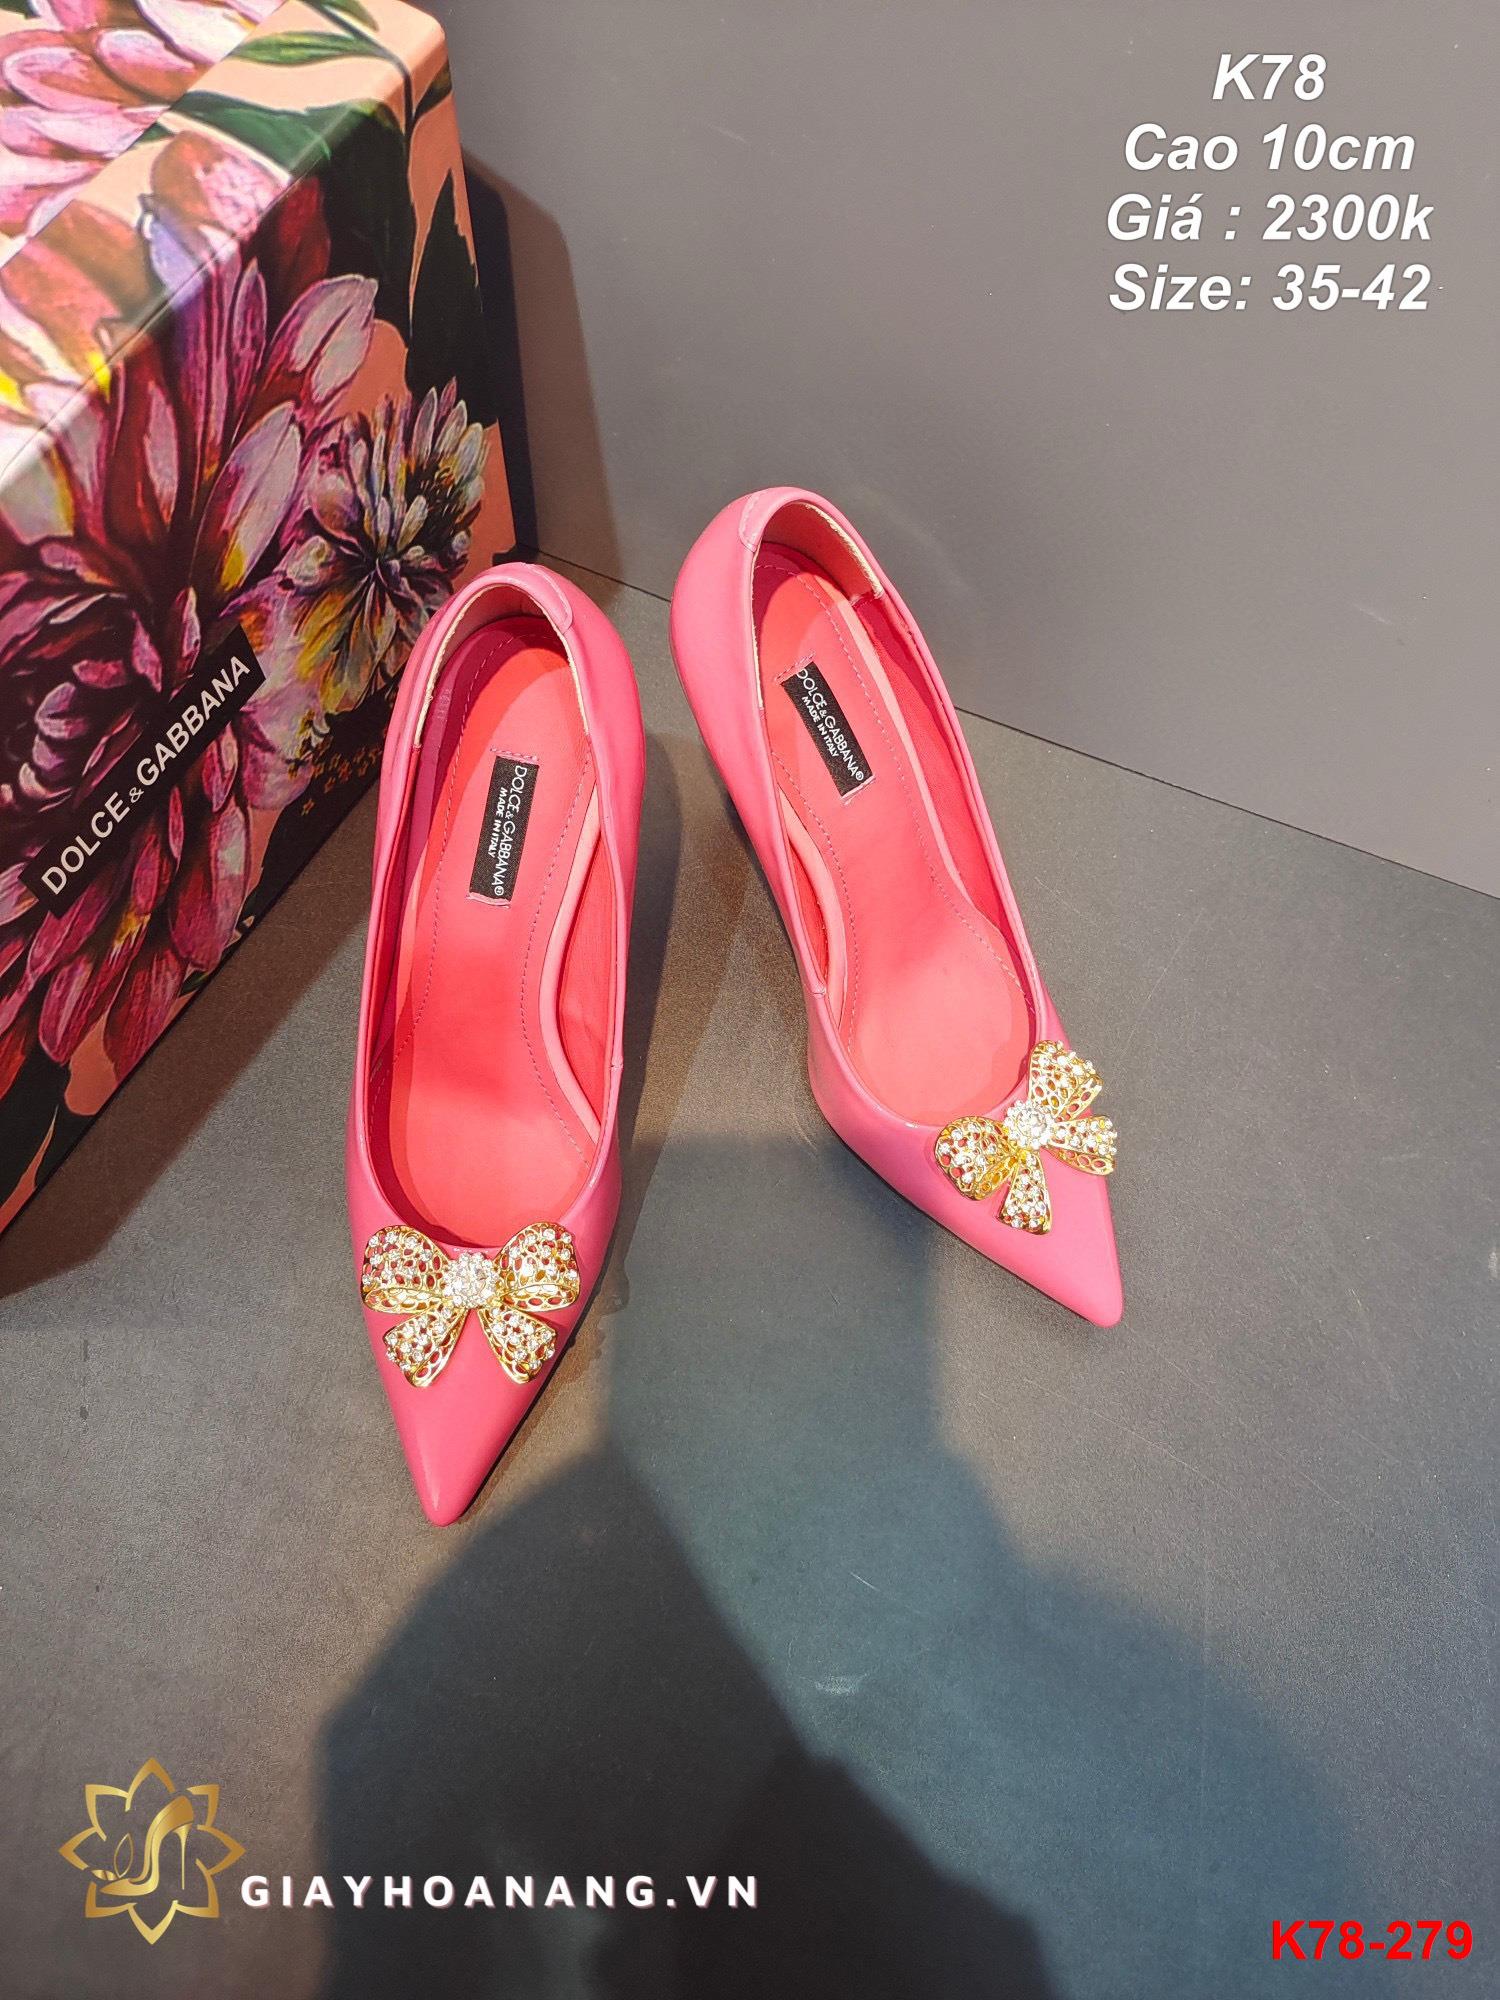 K78-279 Dolce & Gabbana giày cao 10cm siêu cấp